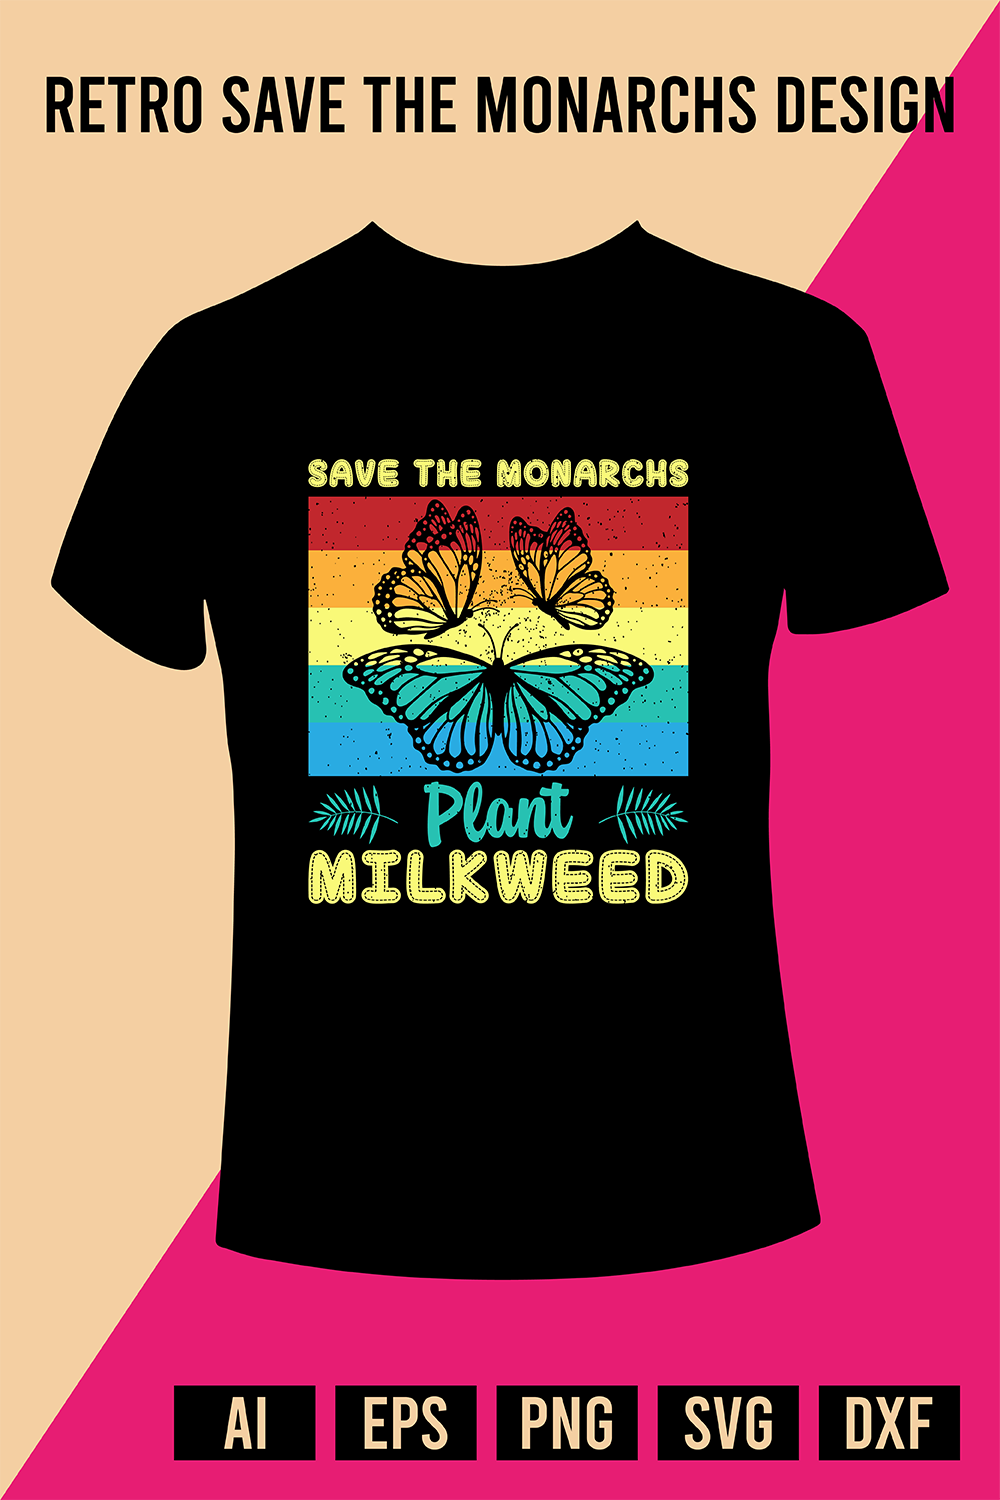 Retro Save The Monarchs T-Shirt Design pinterest preview image.